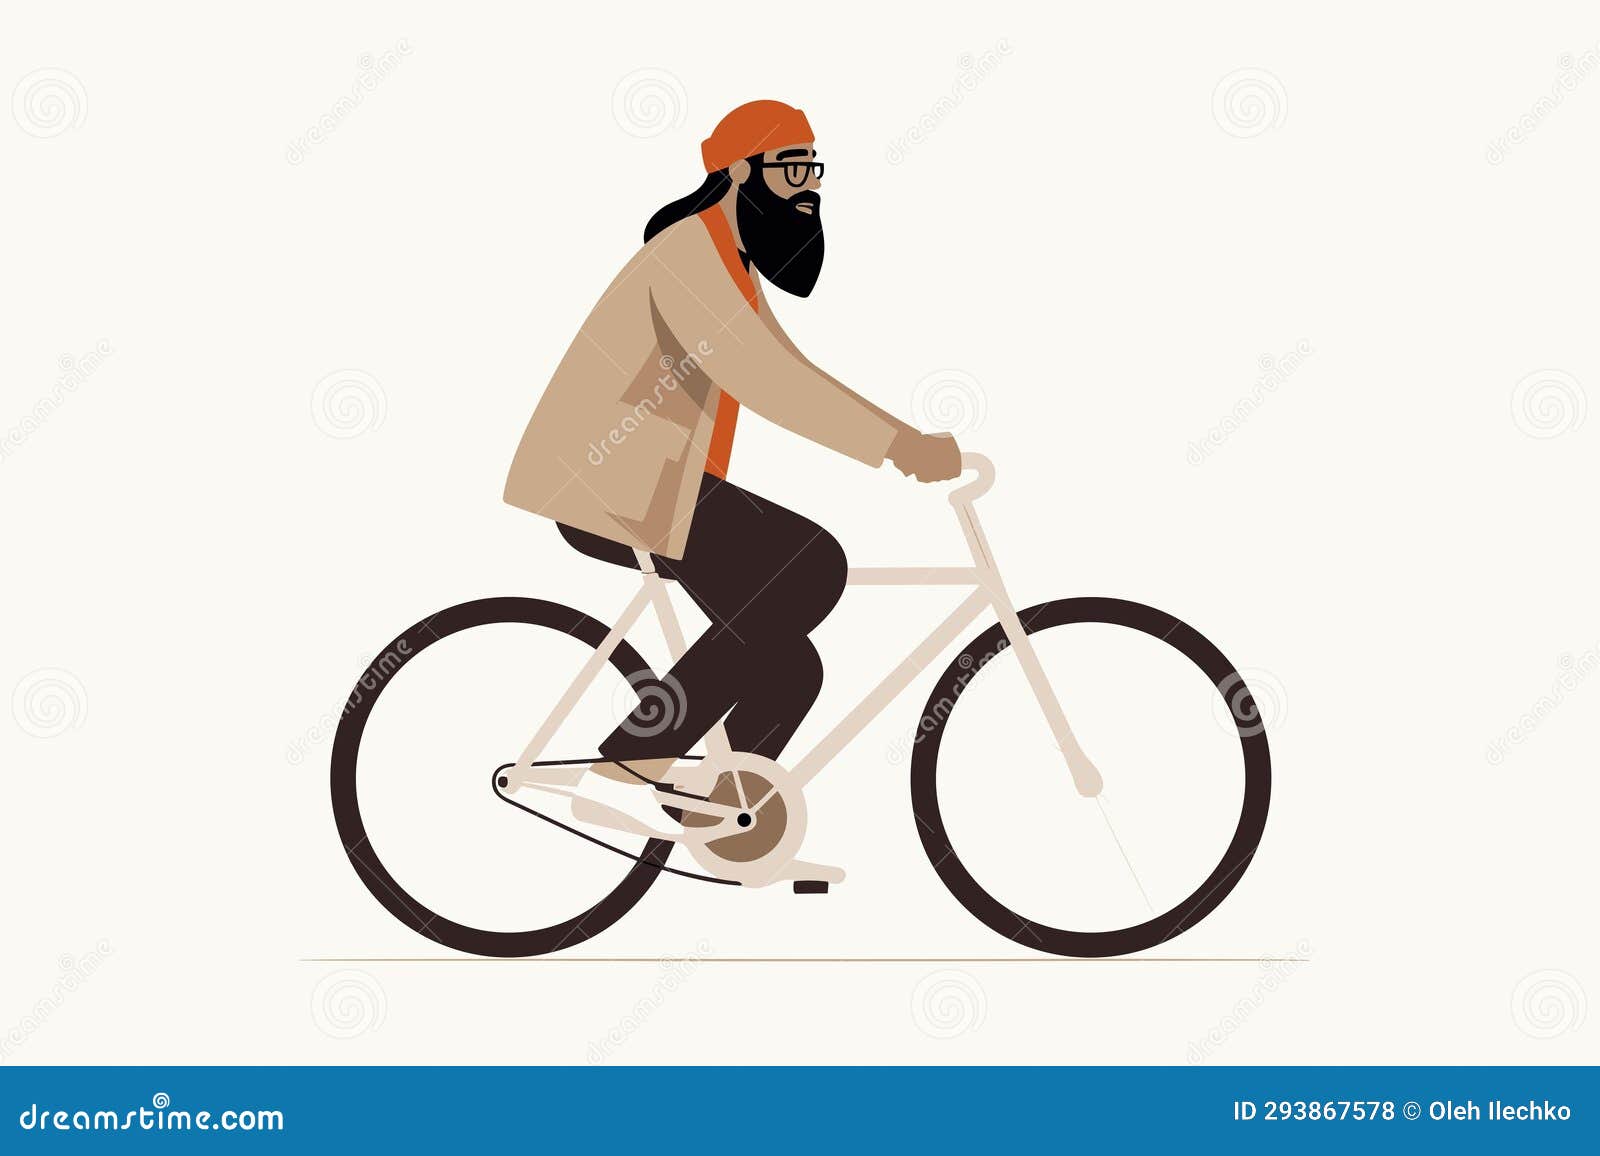 man on bicicle  flat minimalistic  